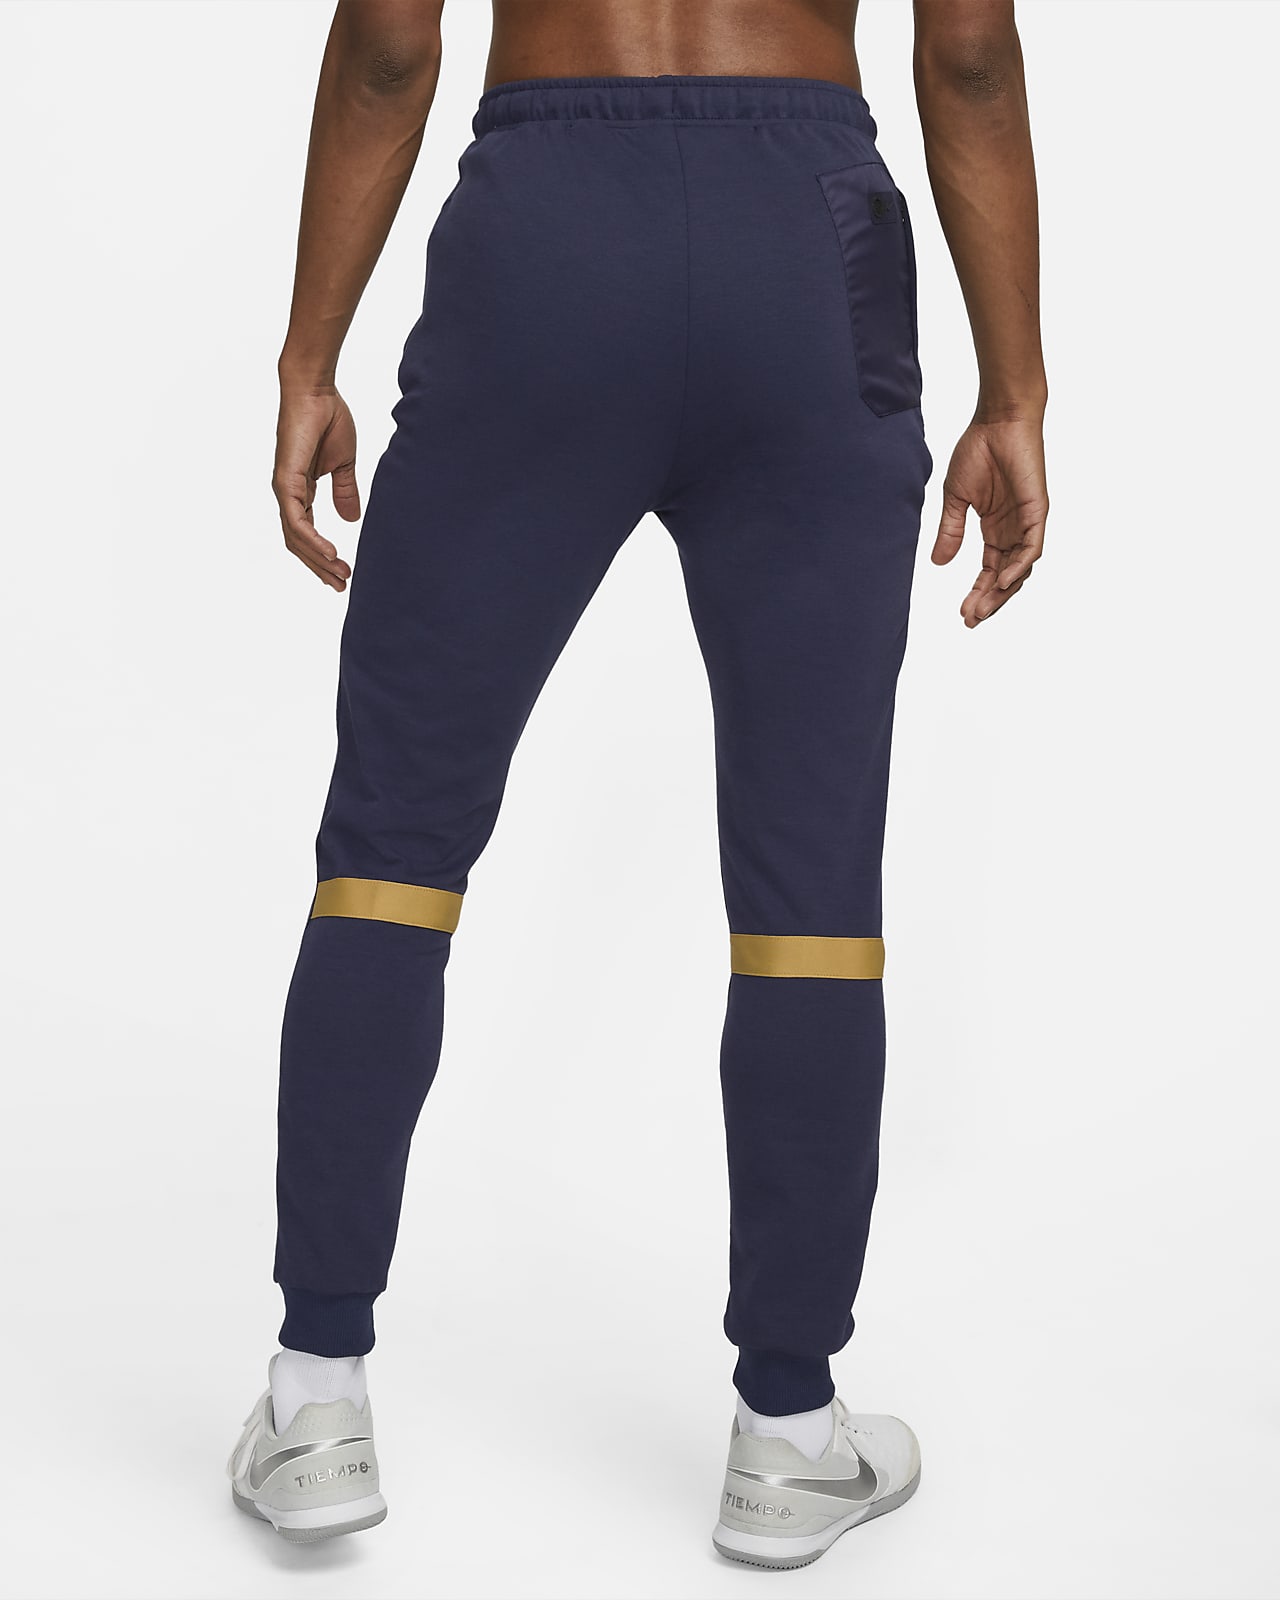 Confundir Gigante romano Pantalones de fútbol Nike Dri-FIT para hombre Chelsea FC. Nike.com